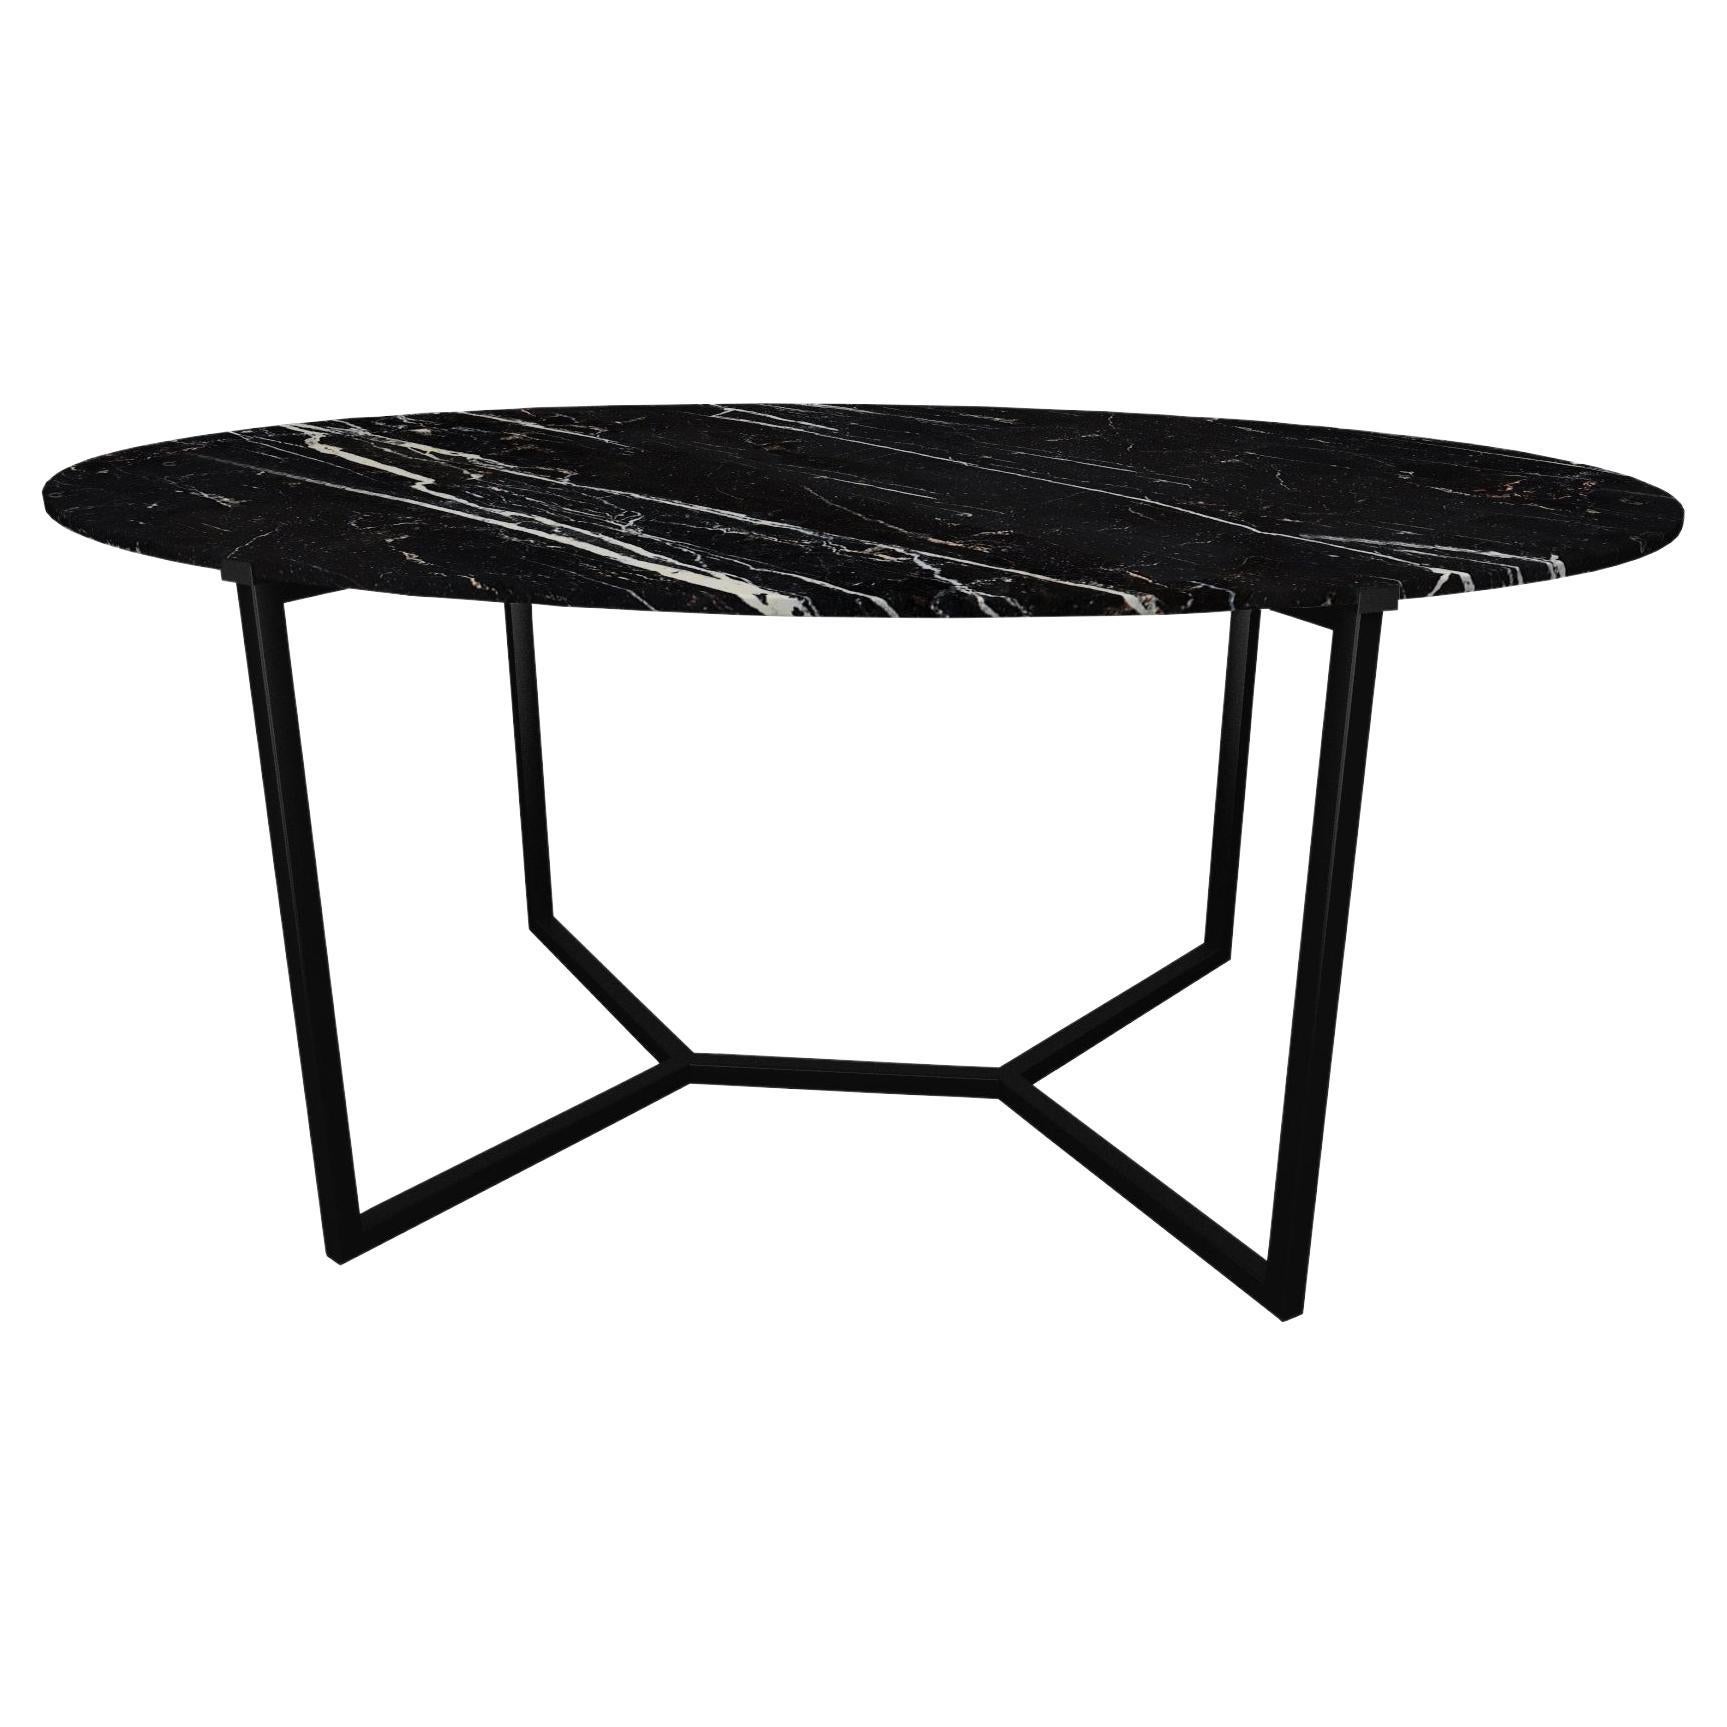 NORDST TEDDY Dining Table, Italian Black Eagle Marble, Danish Modern Design, New